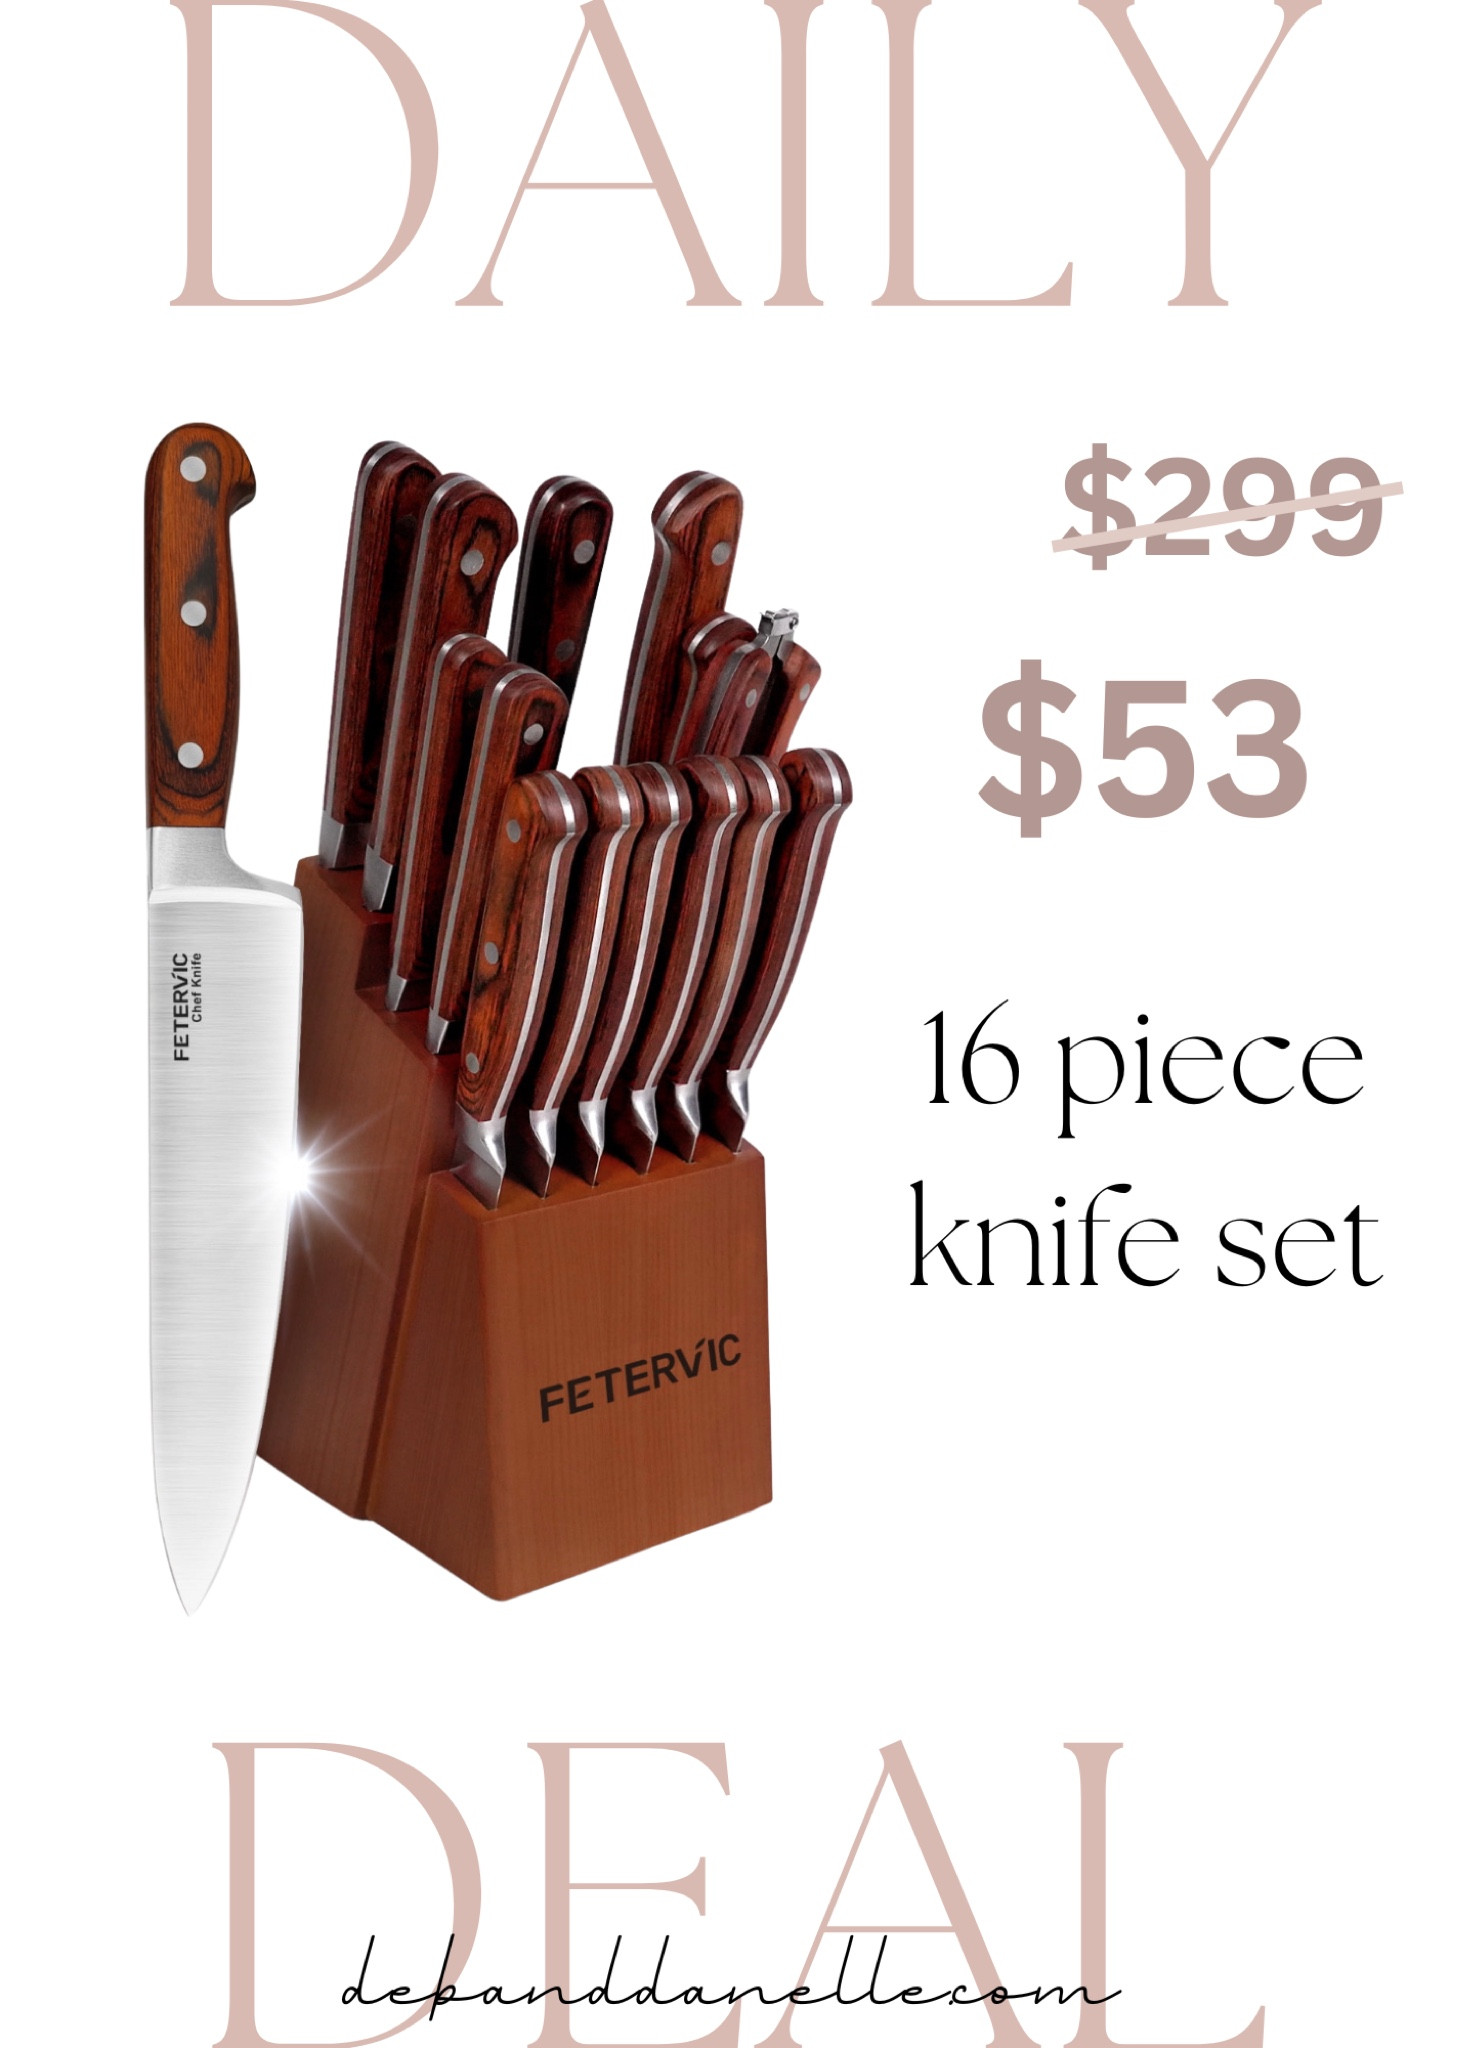 FETERVIC Knife Block Set, 16 … curated on LTK